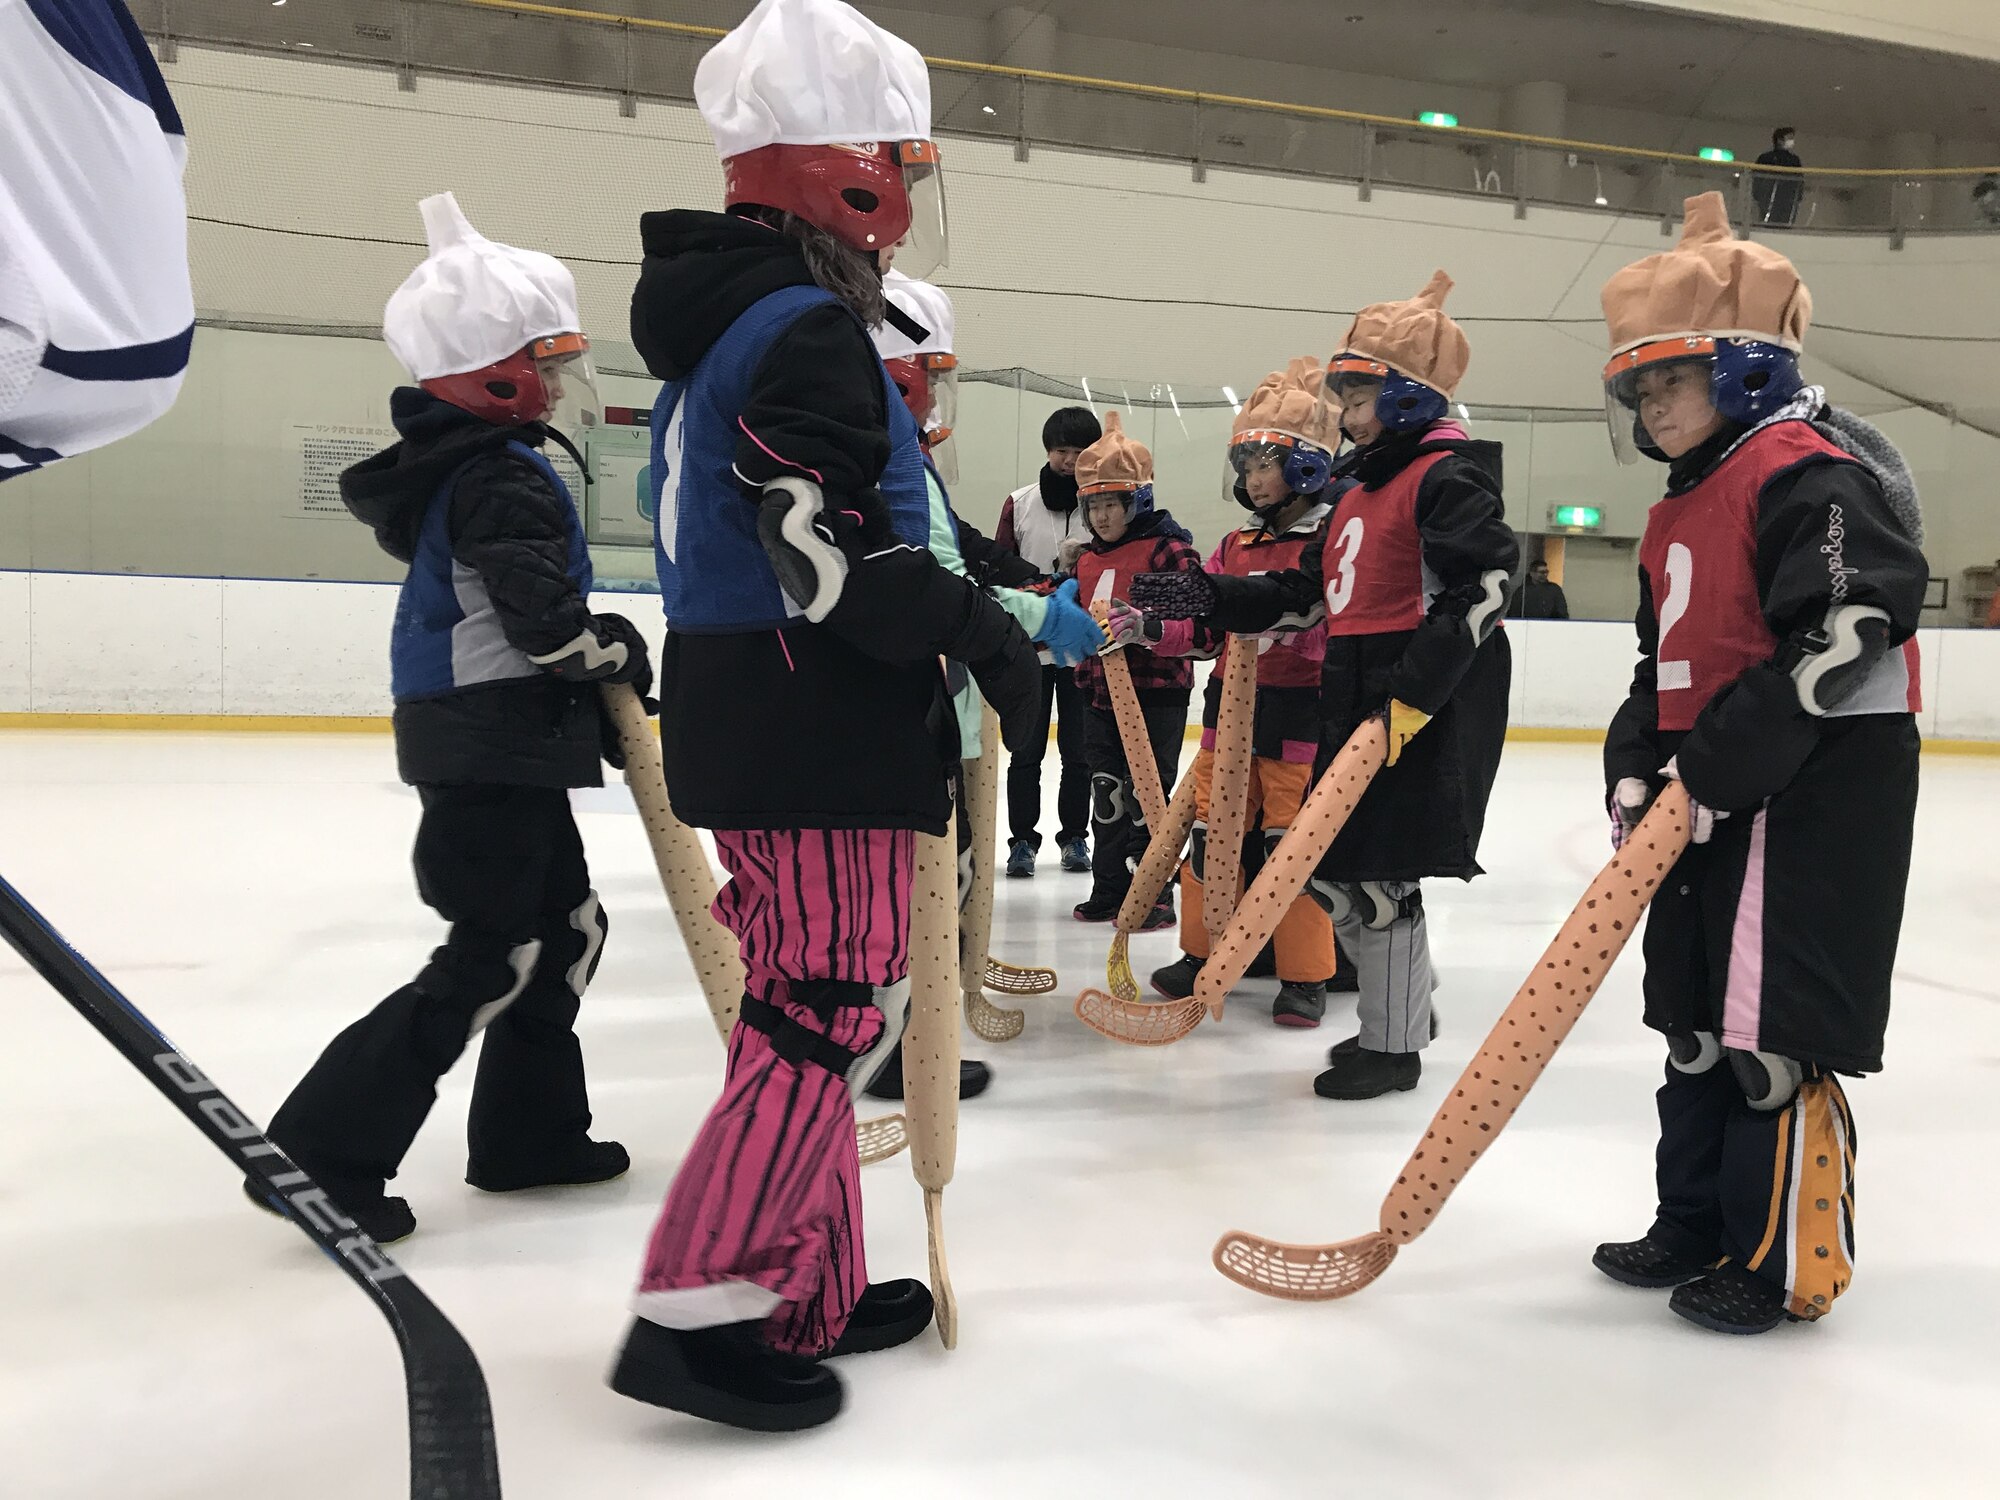 Misawa City and Misawa Air Base kids competed in the 6th Misawa Ice Hockey Exhibition at the Misawa International Center Hockey Arena Jan 27, 2018.